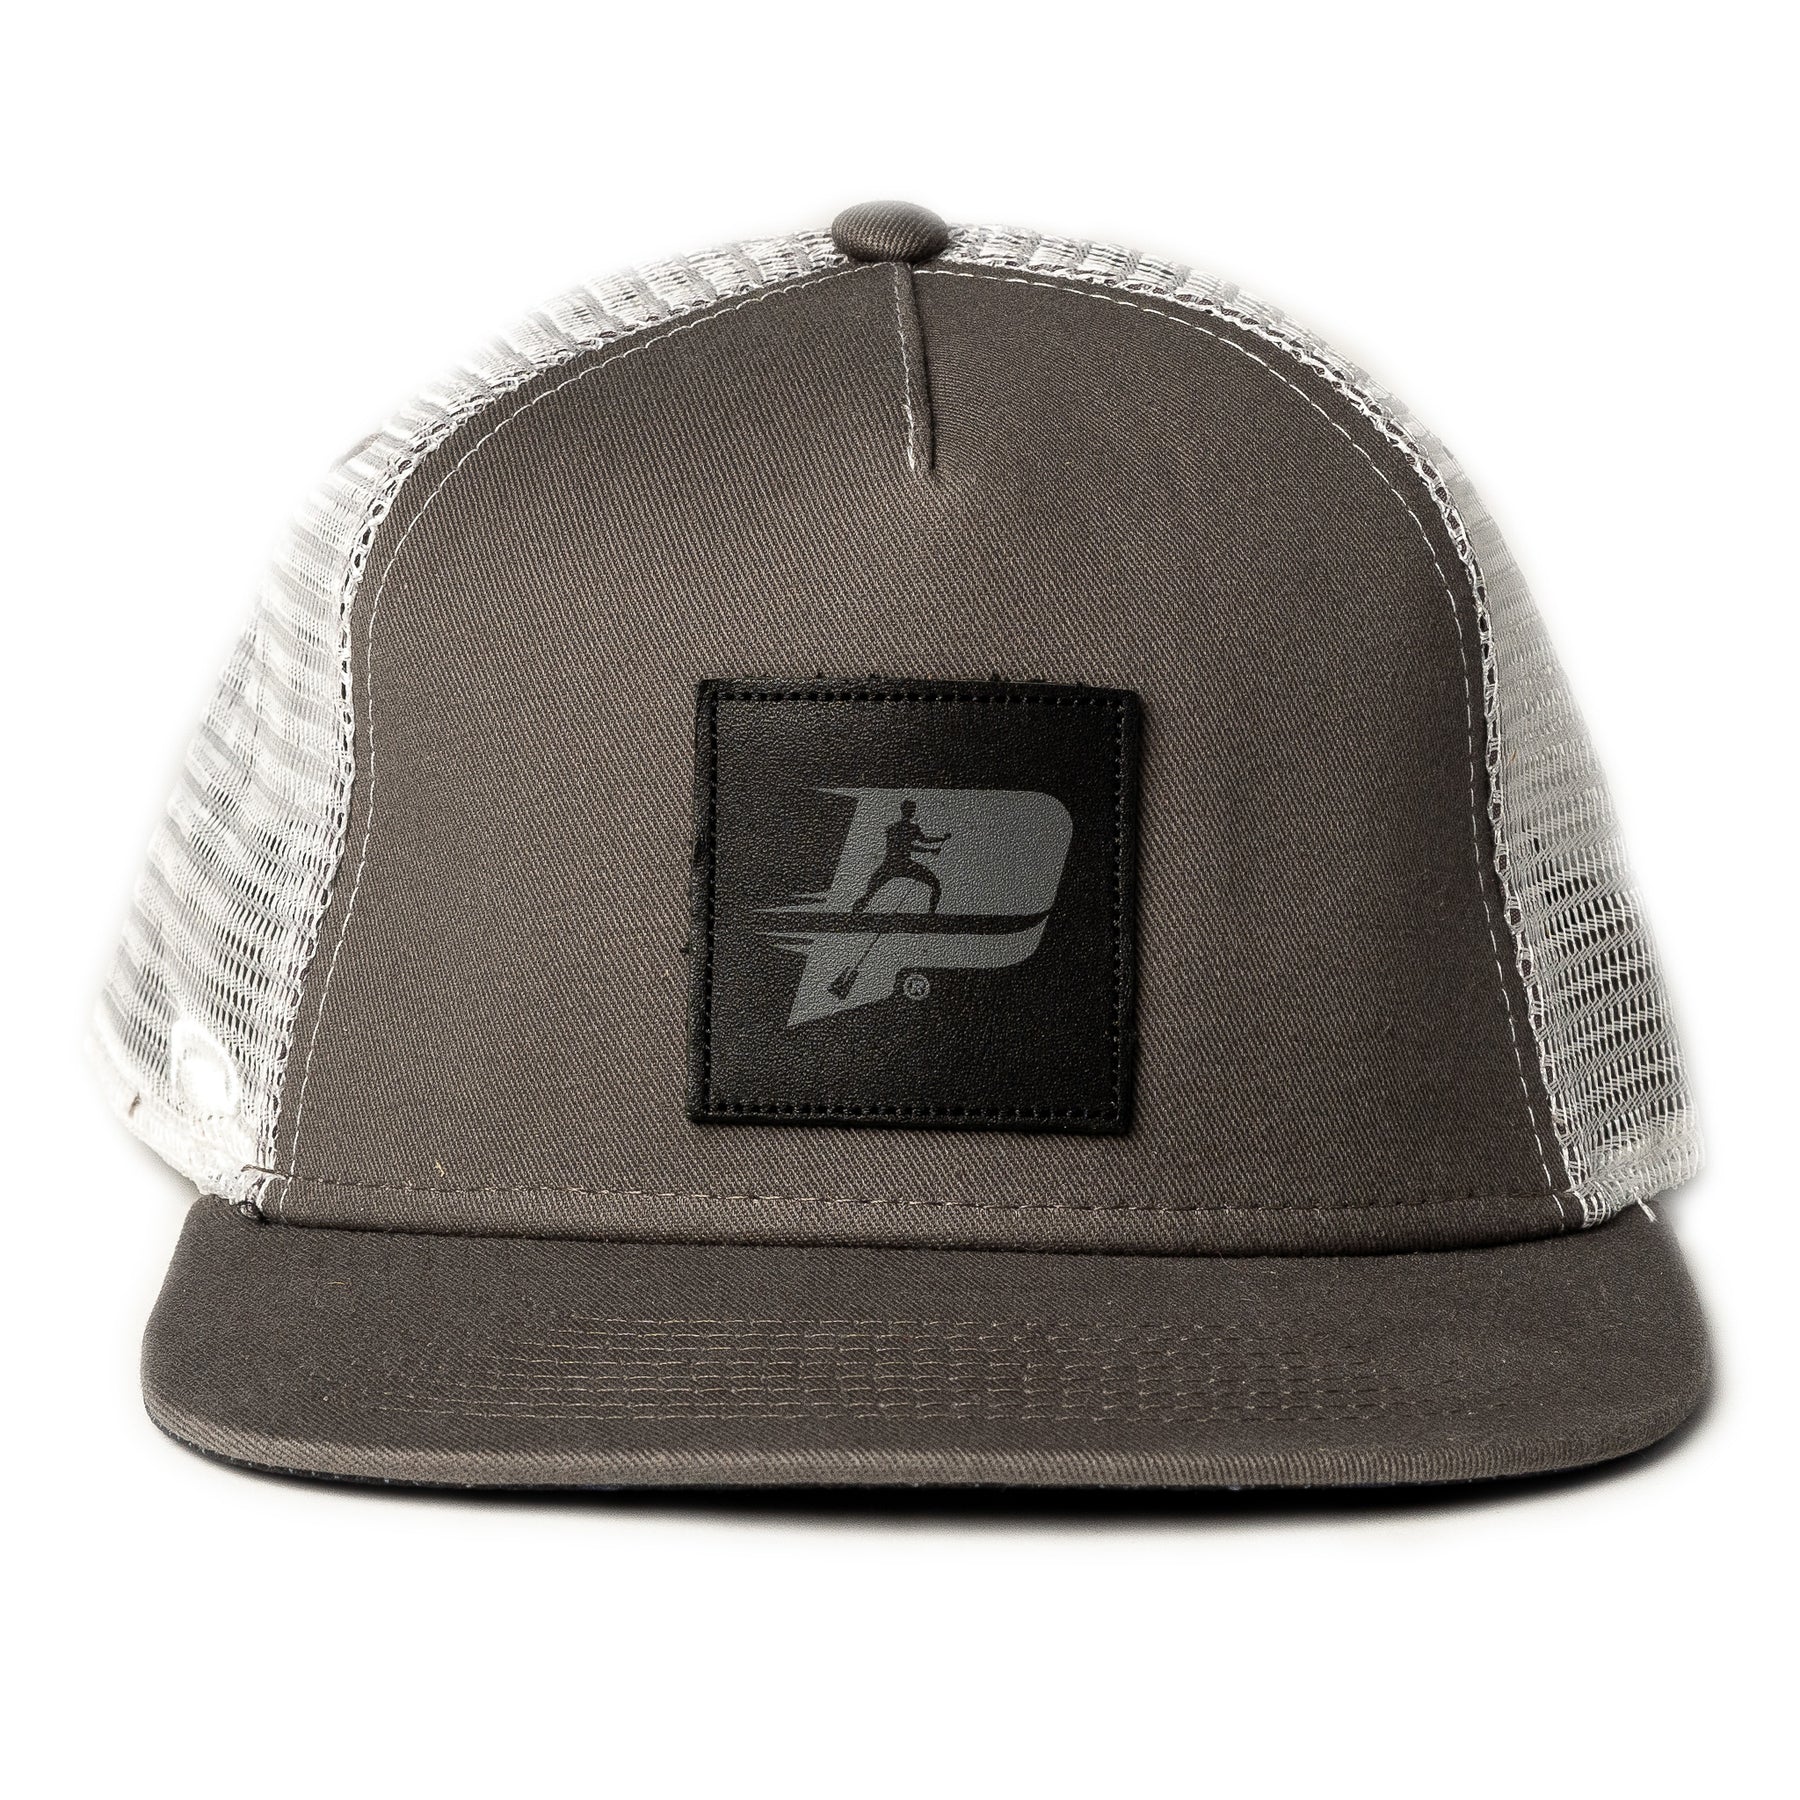 Paddleboarder Hat Cap Gray & White Mesh Snapback | Paddleboarder